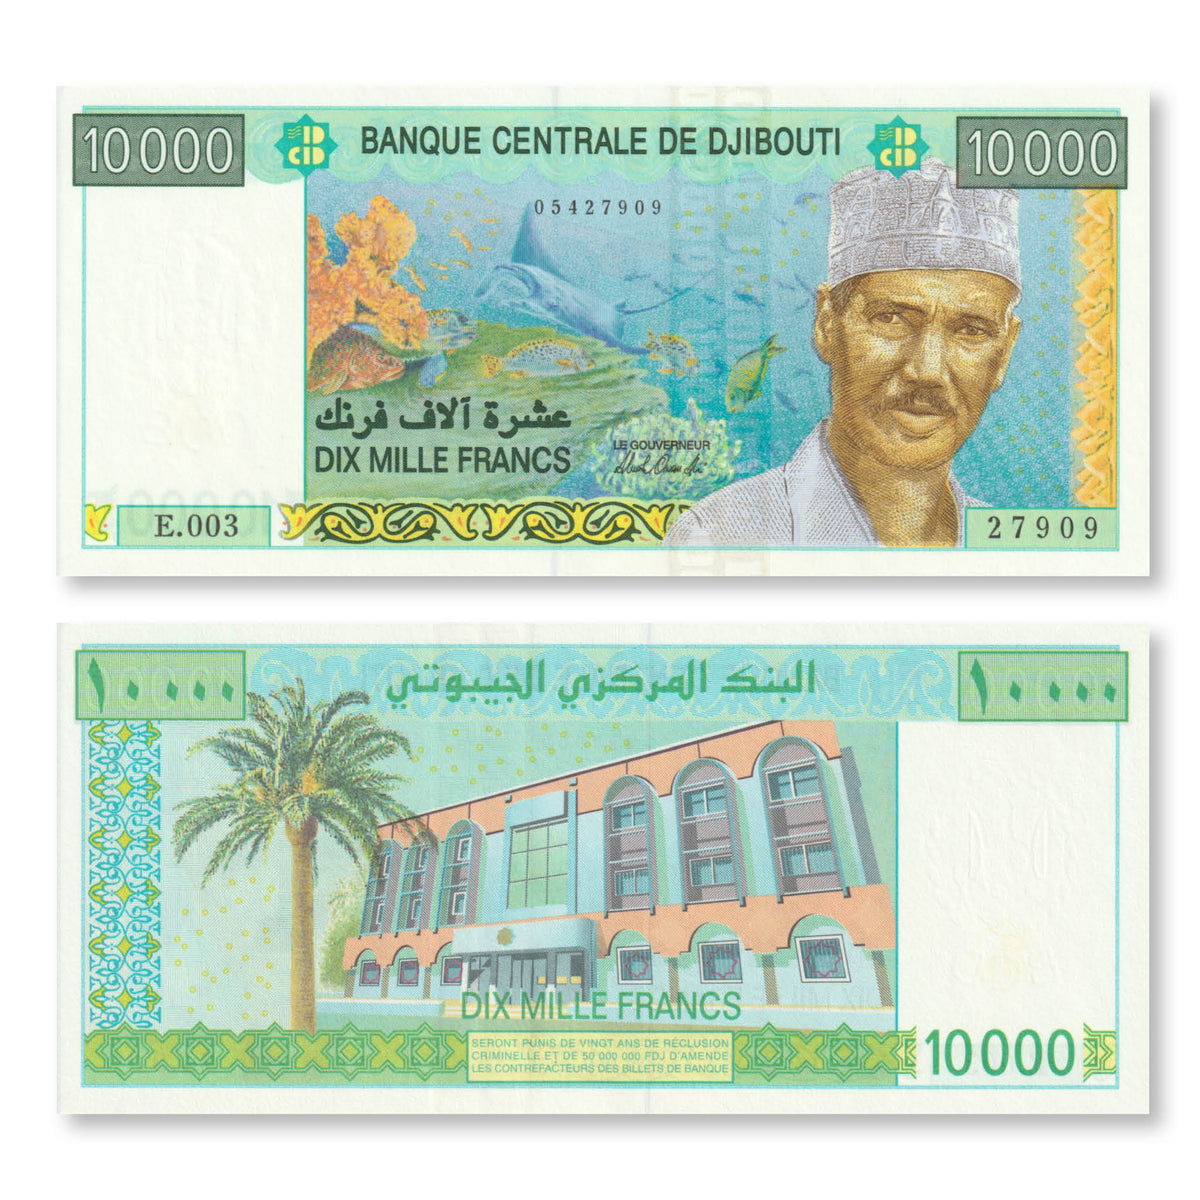 Djibouti 10000 Francs, 2009, B204b, P45, UNC - Robert's World Money - World Banknotes